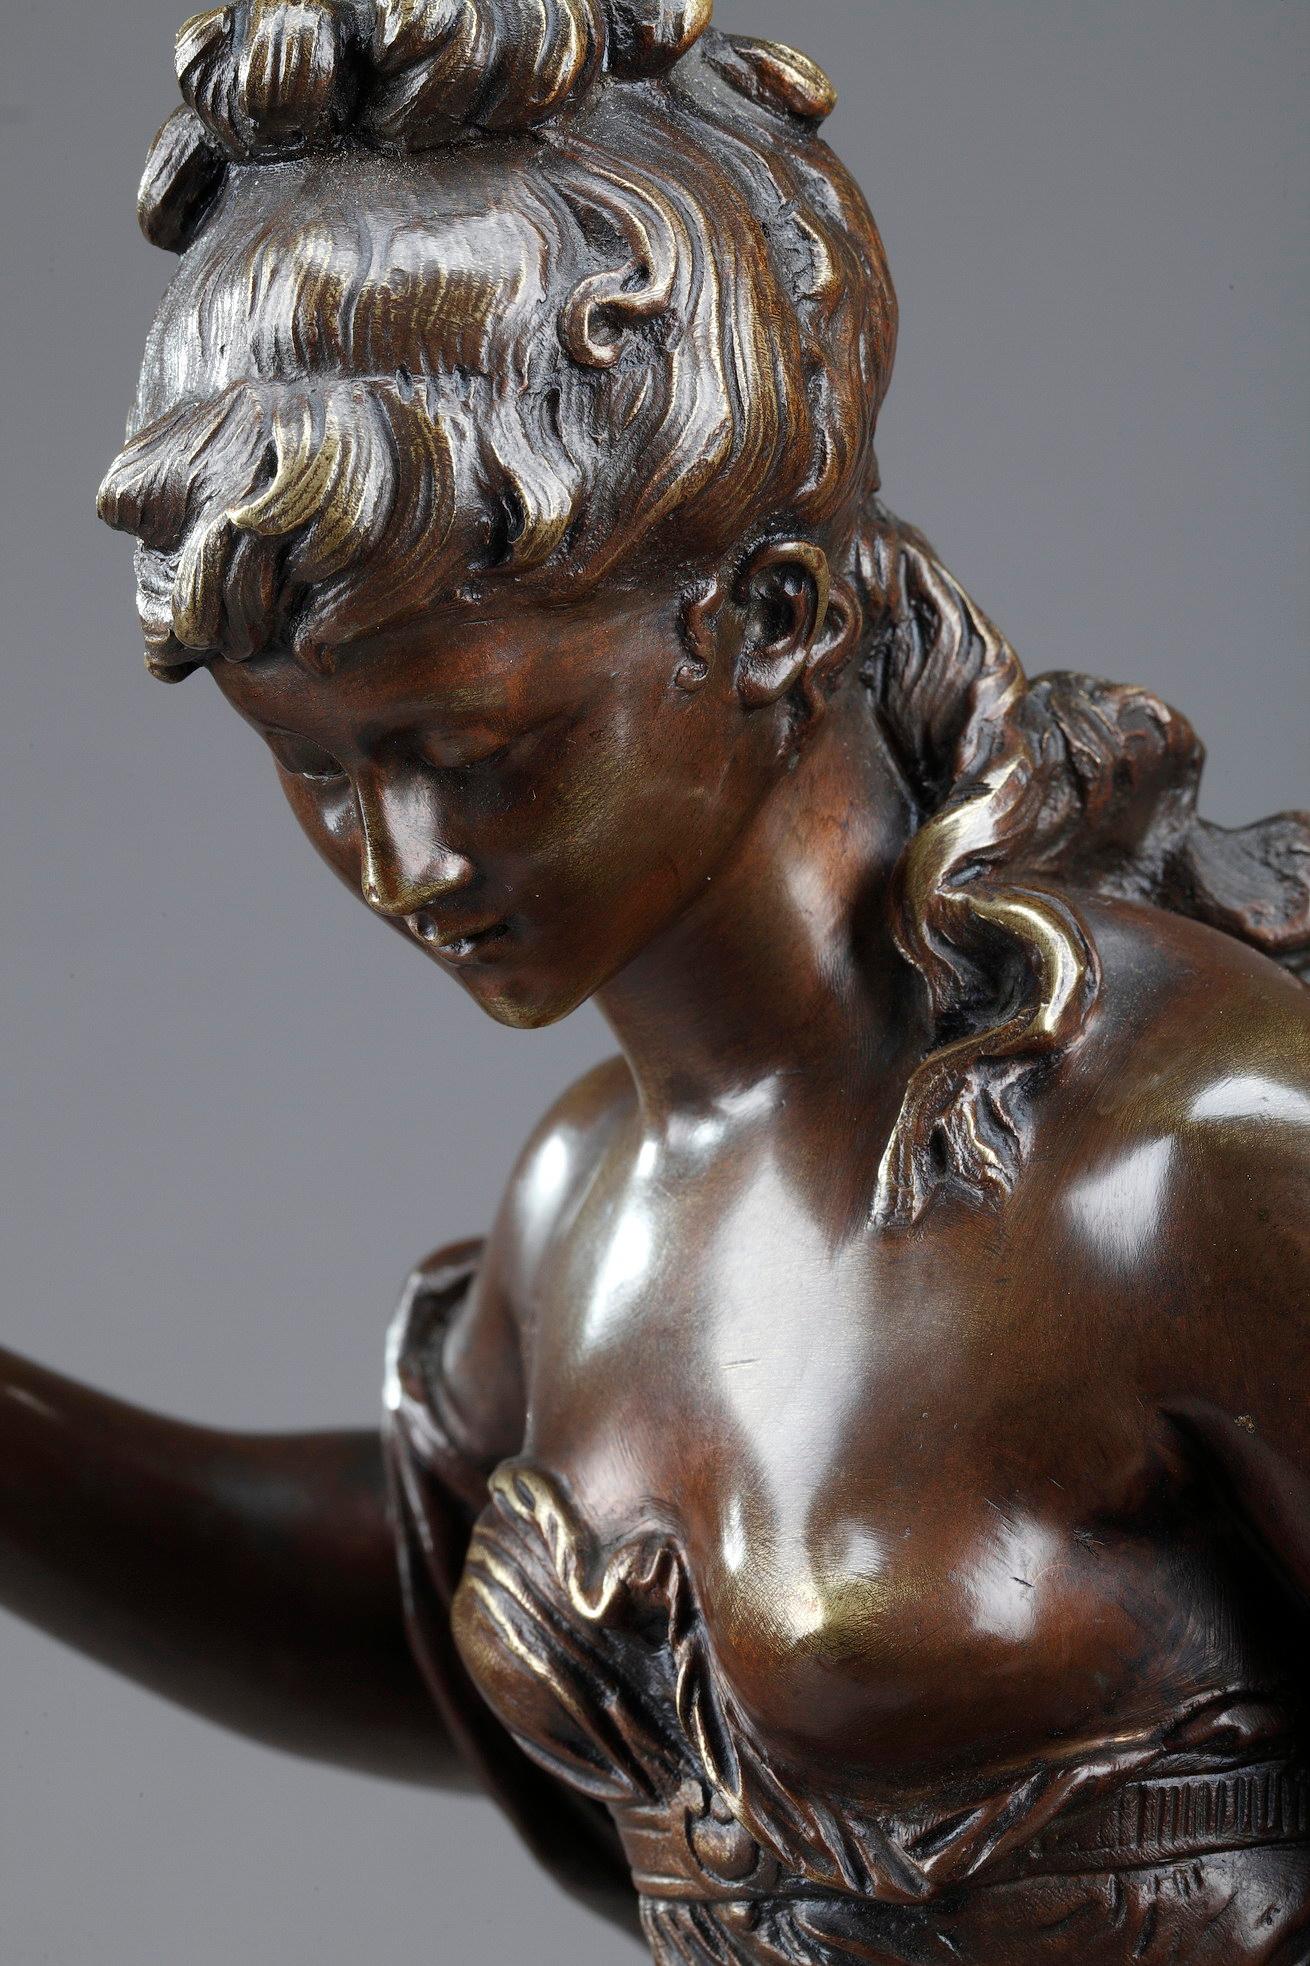 Late 19th Century Bronze Sculpture, 